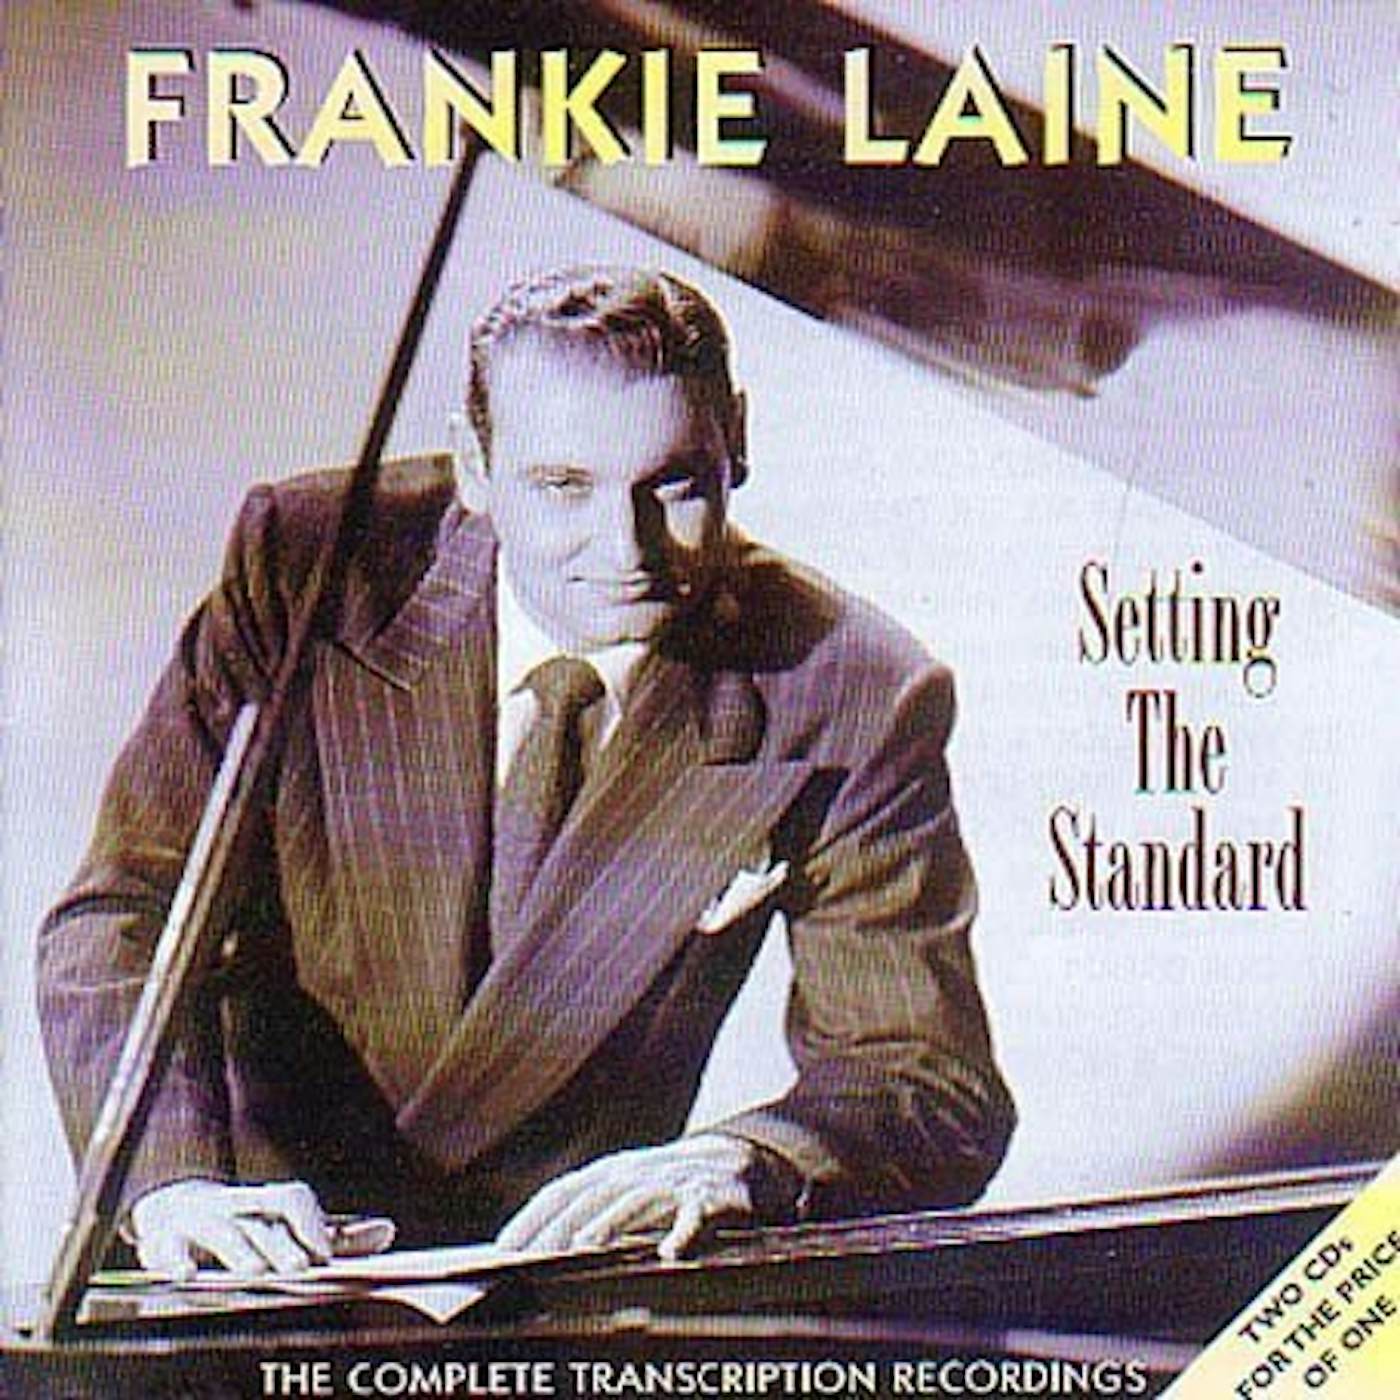 Frankie Laine SETTING THE STANDARD: COMPLETE TRANSCRIPTION CD